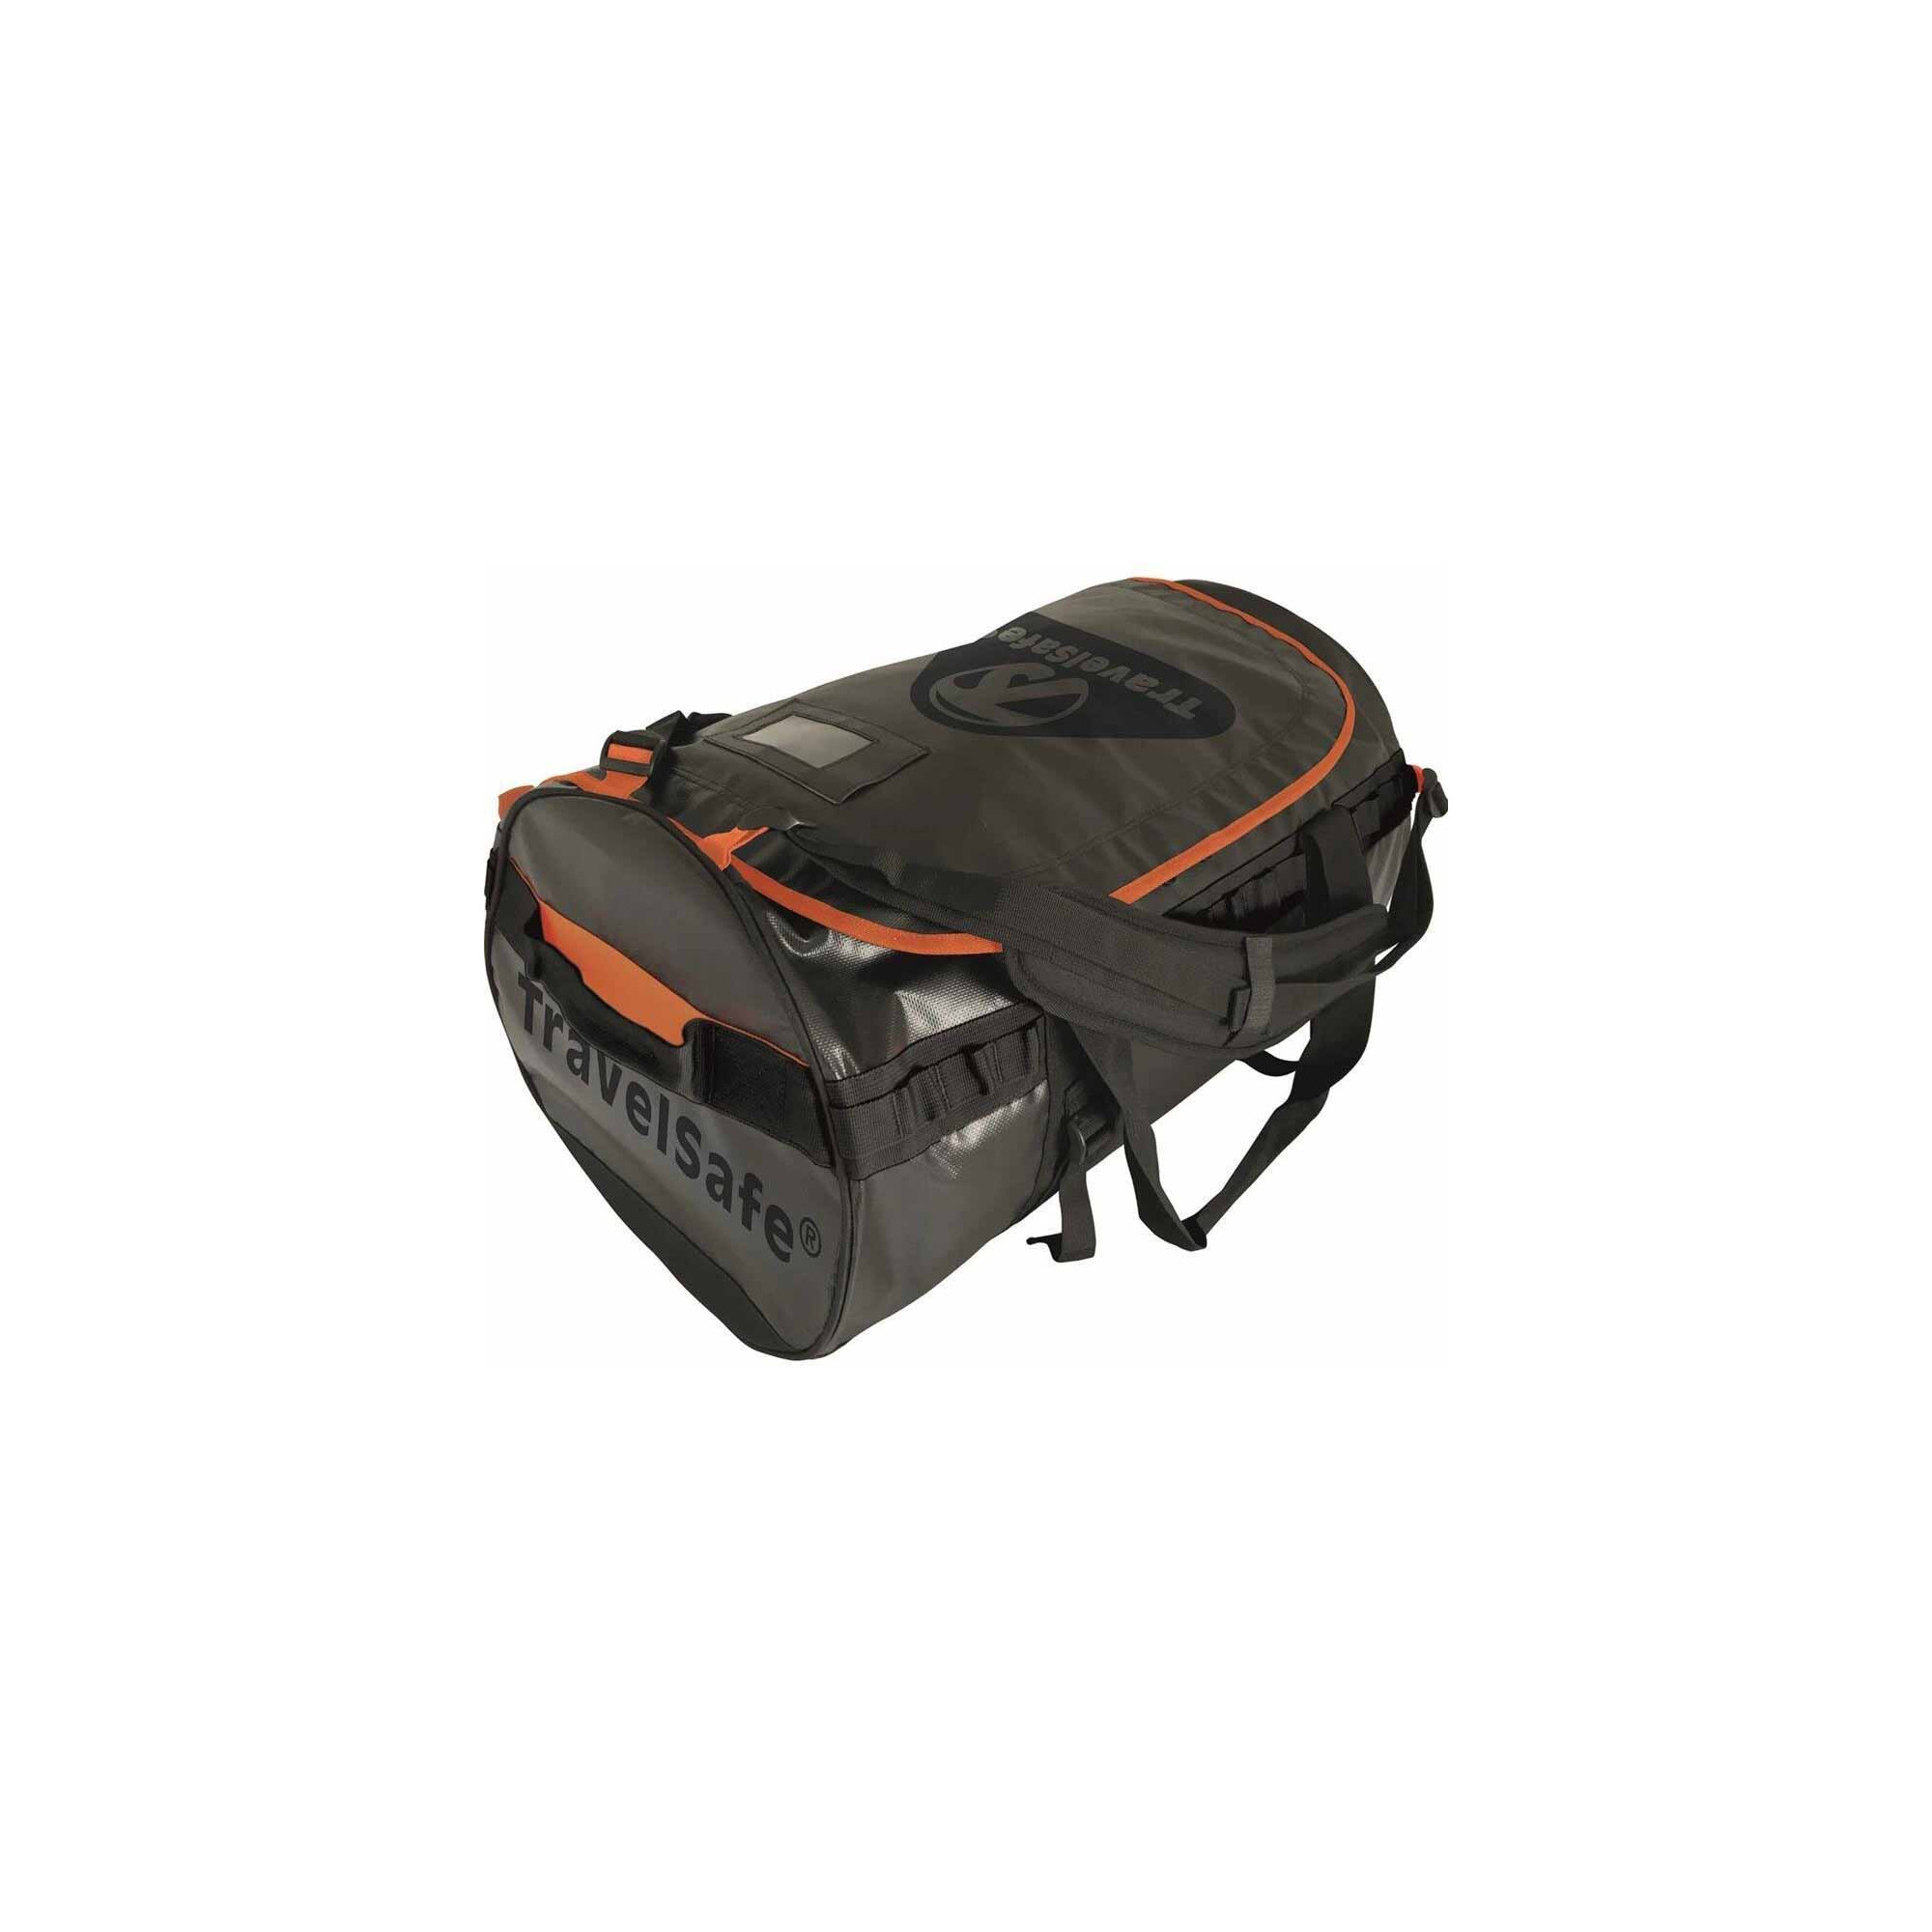 Duffle Bag Nepal XL 110L TravelSafe, Reisetasche 8718685012561